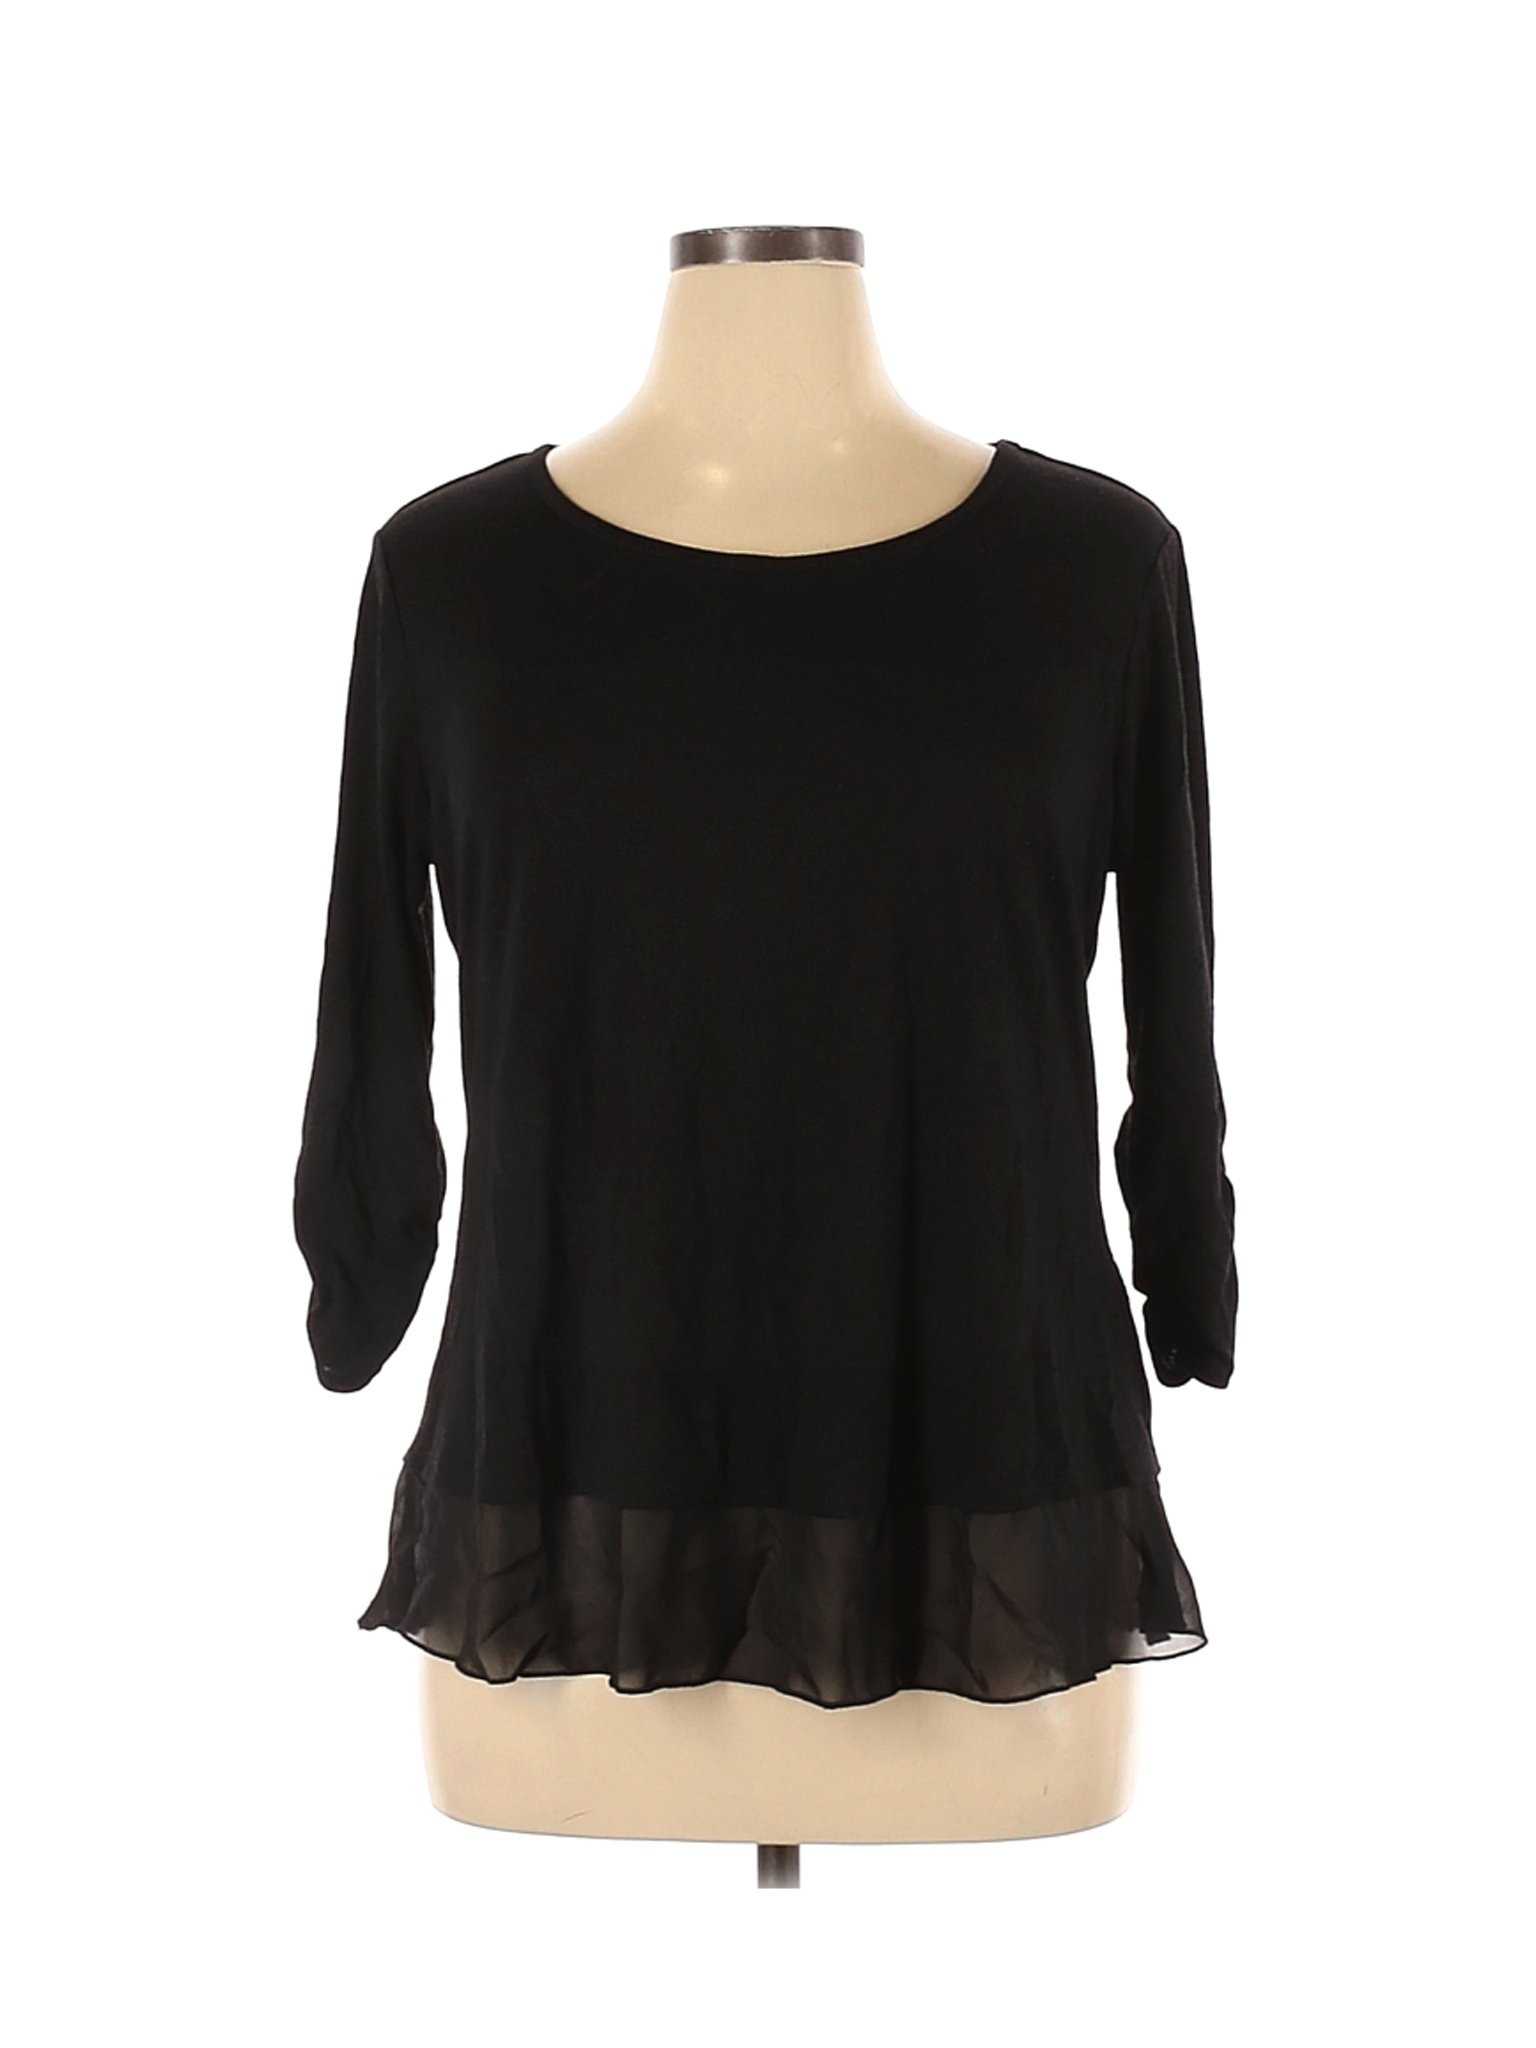 Style&Co Women Black 3/4 Sleeve Top XL Petites | eBay